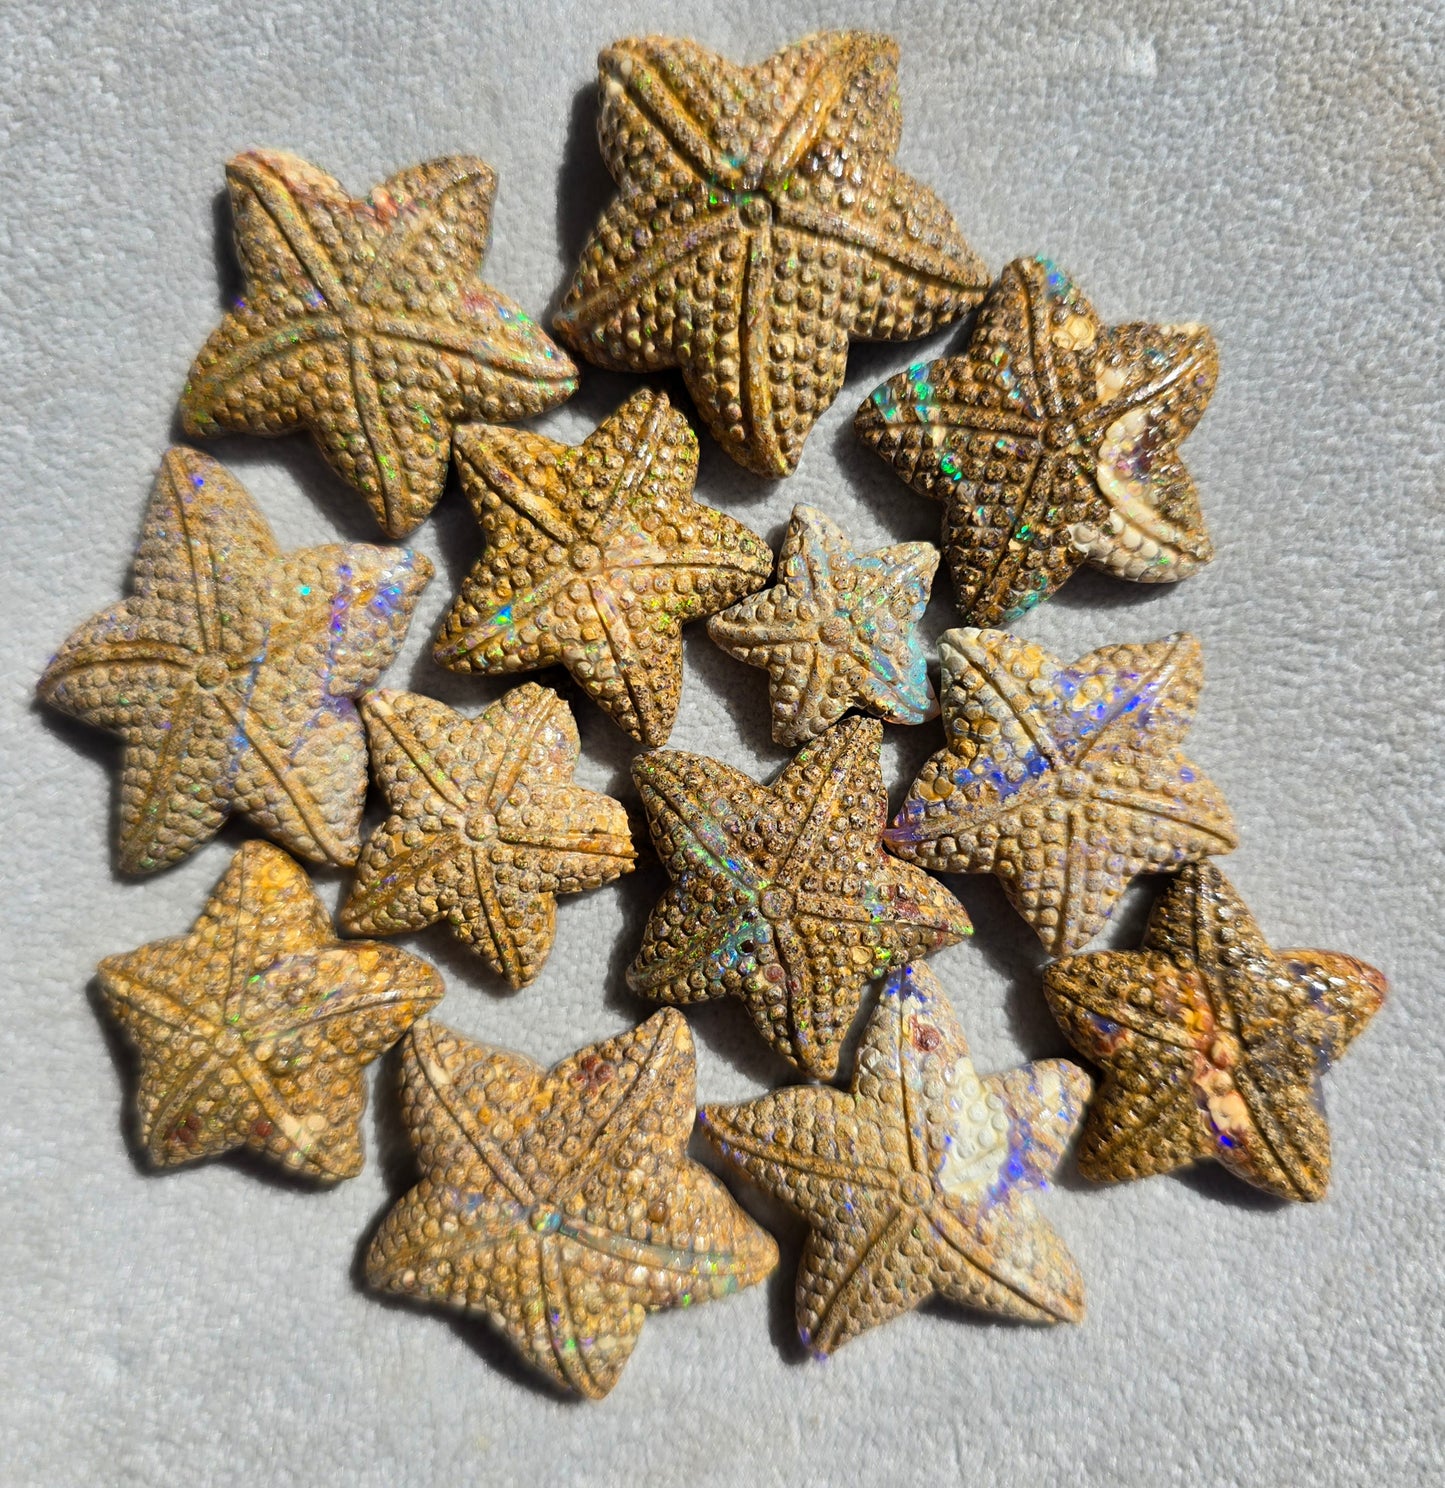 Exquisite 52.62 Ct Australian Boulder Opal Matrix Starfish Carving